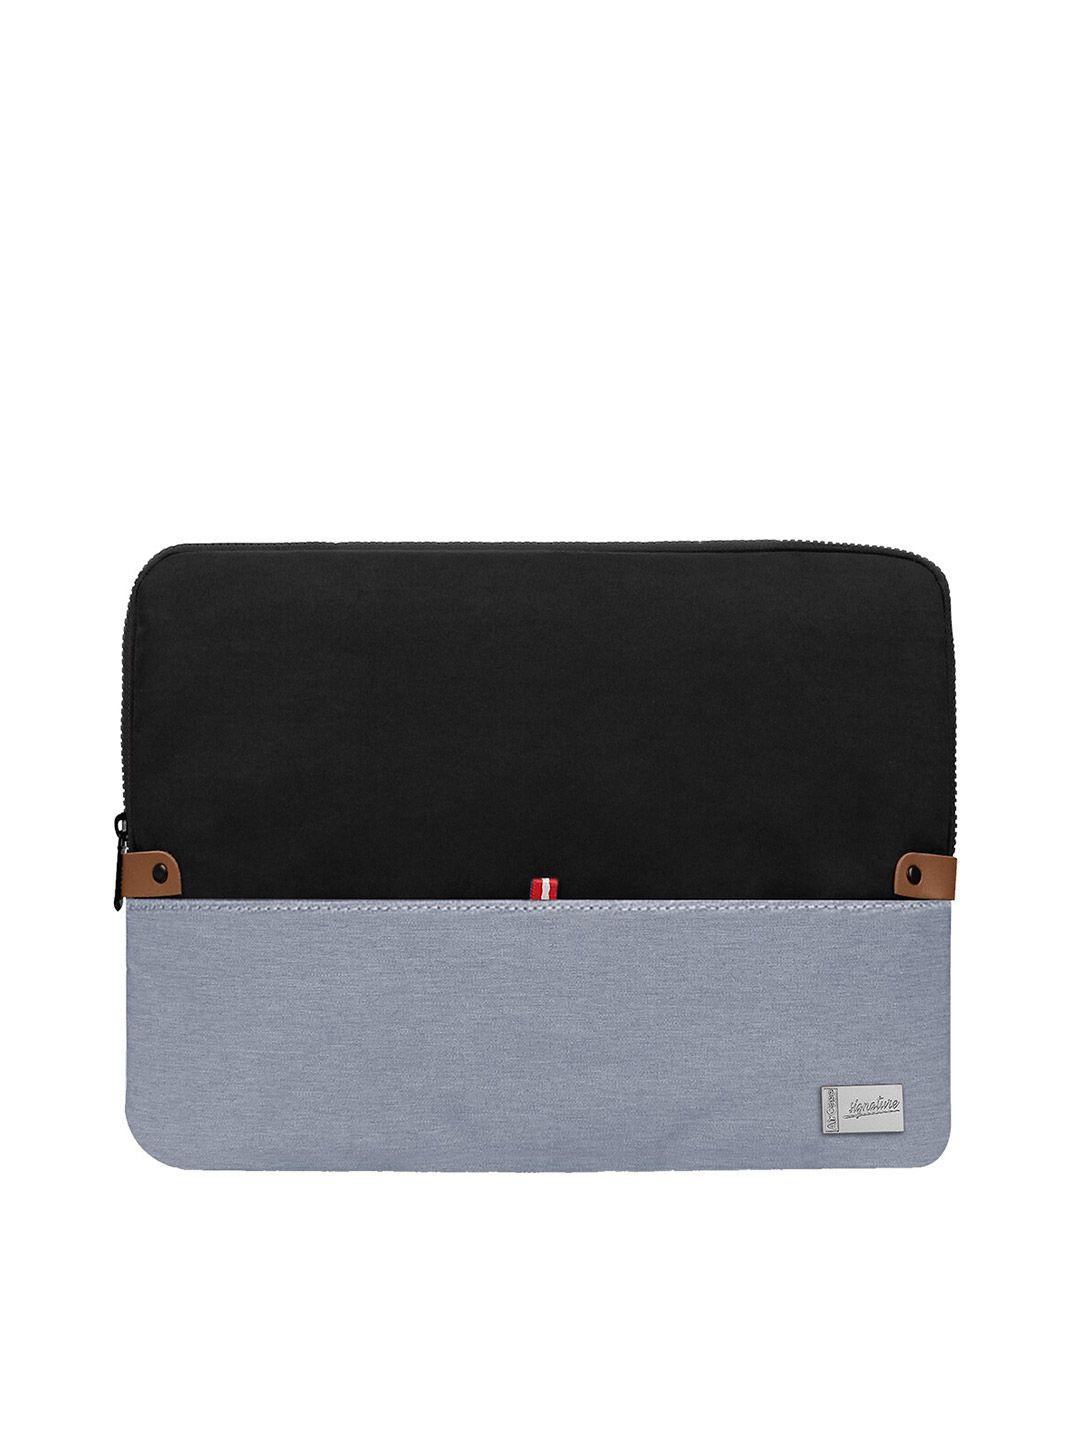 aircase unisex black & grey colourblocked laptop sleeve